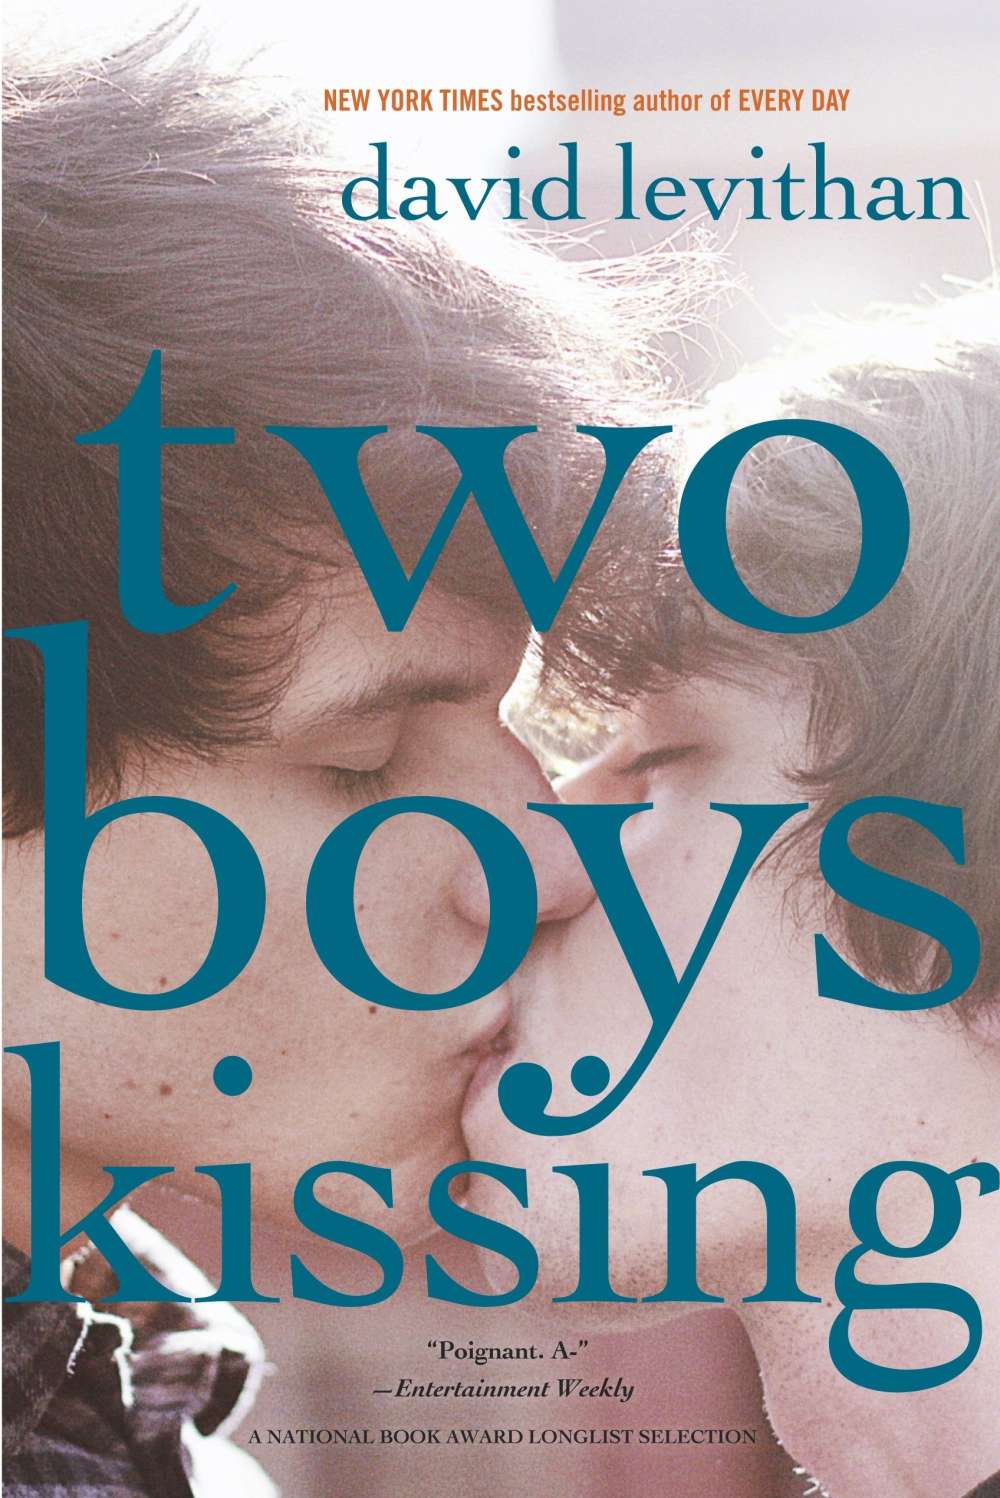 'Two Boys Kissing' by David Levithan